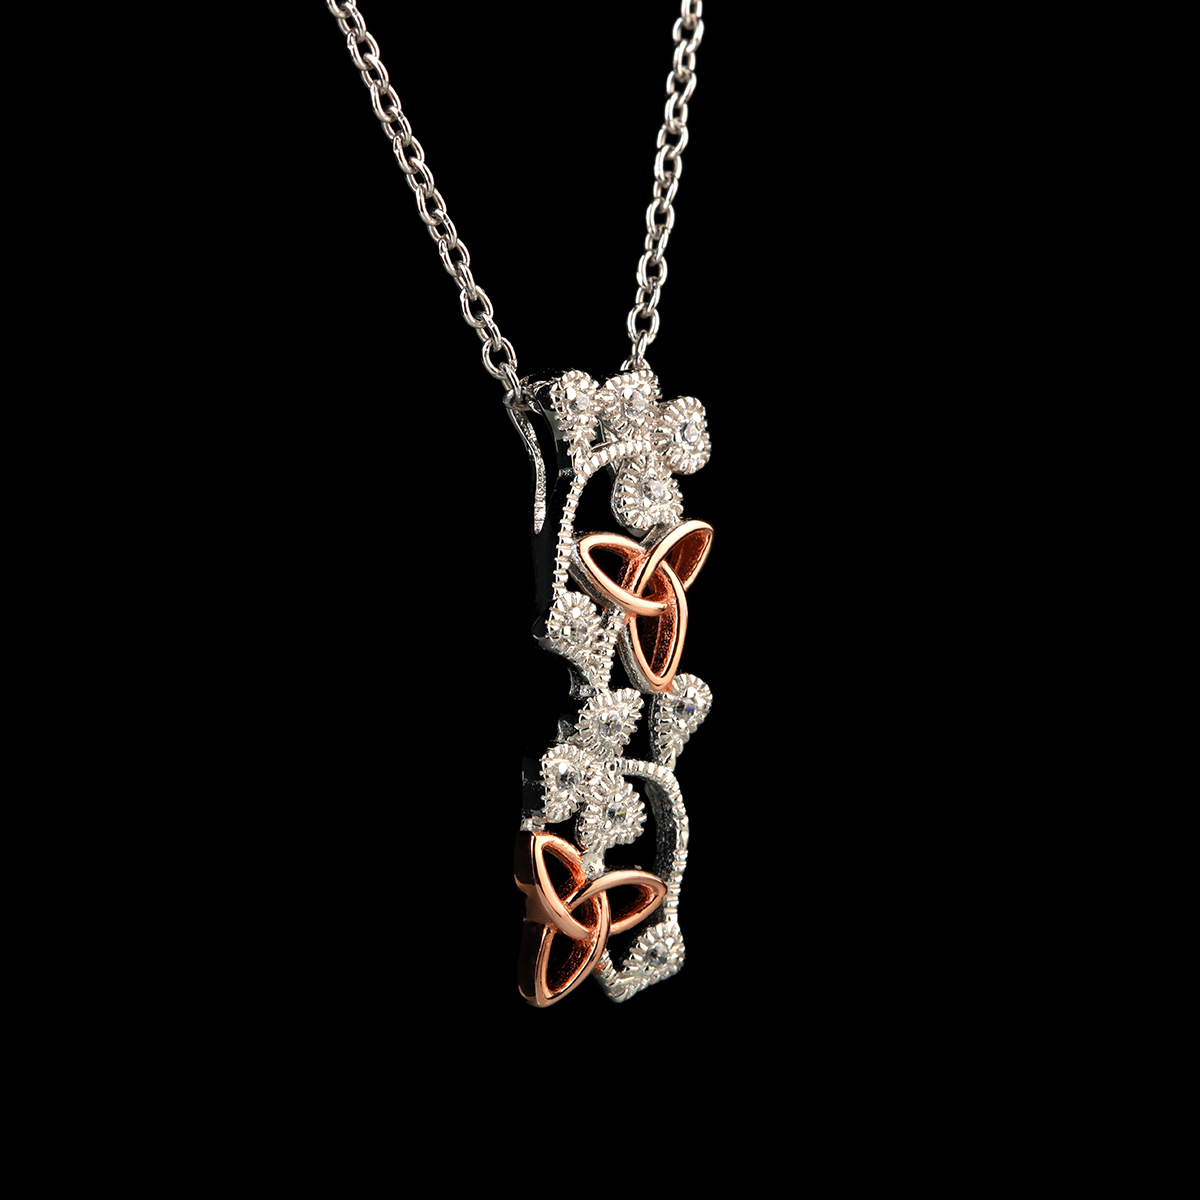 Crystal Trinity Shamrock Kette aus Irland - Silber & Roségold mit Kristall